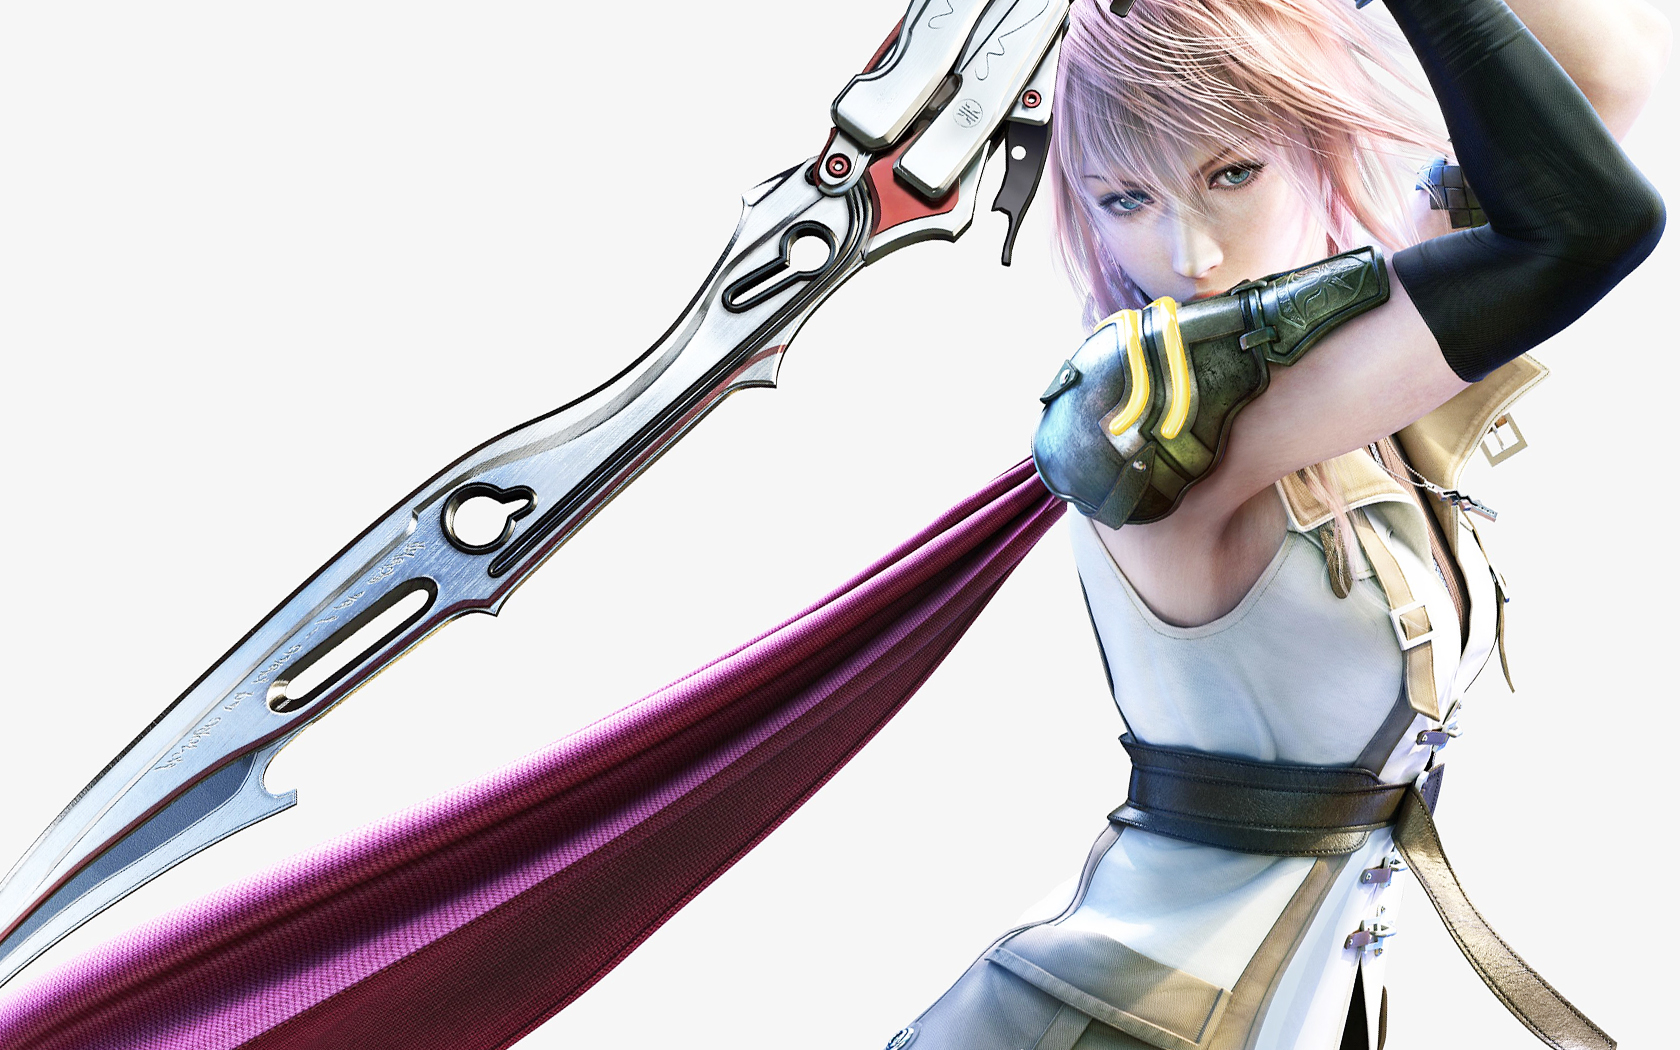 Lightning character from Final Fantasy video game, on HD desktop wallpaper.